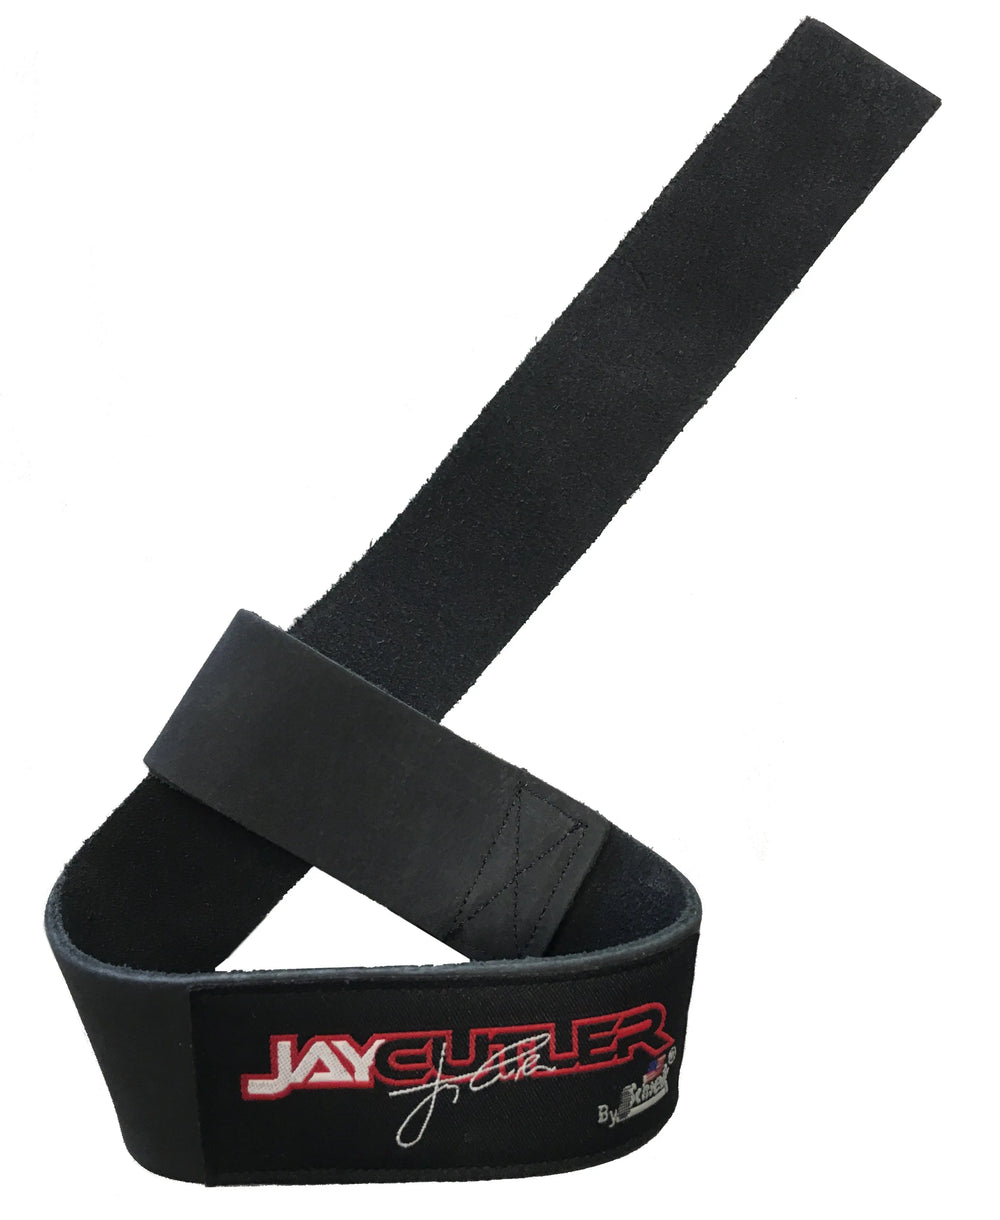 Model J-1000LLS Jay Cutler Signature Leather Lifting Straps Schiek Sports